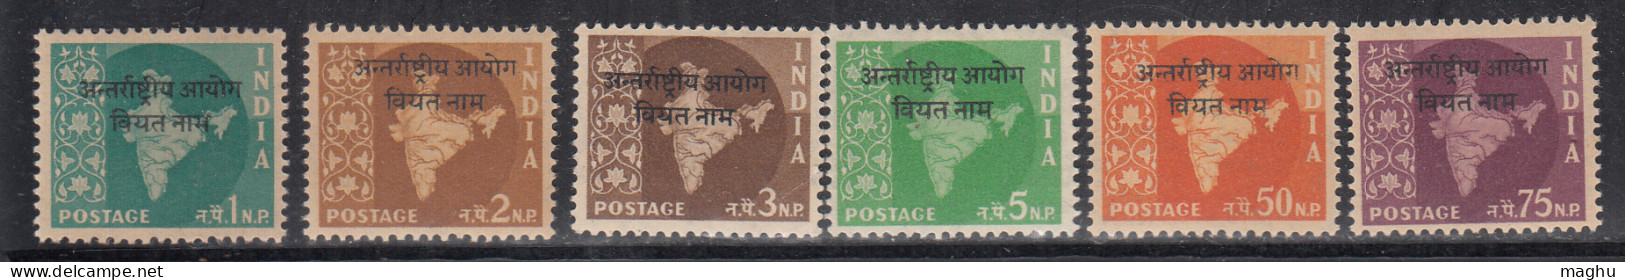 Full Set Of 6, Oveperprint Of 'Vietnam' On Map Series, Watermark Ashokan, India MNH 1962 - Unused Stamps